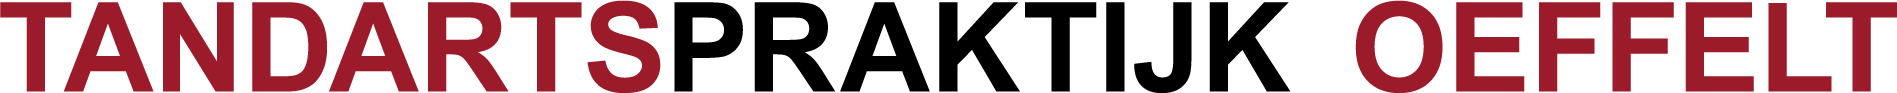 Tandartspraktijk Oeffelt - Logo menu